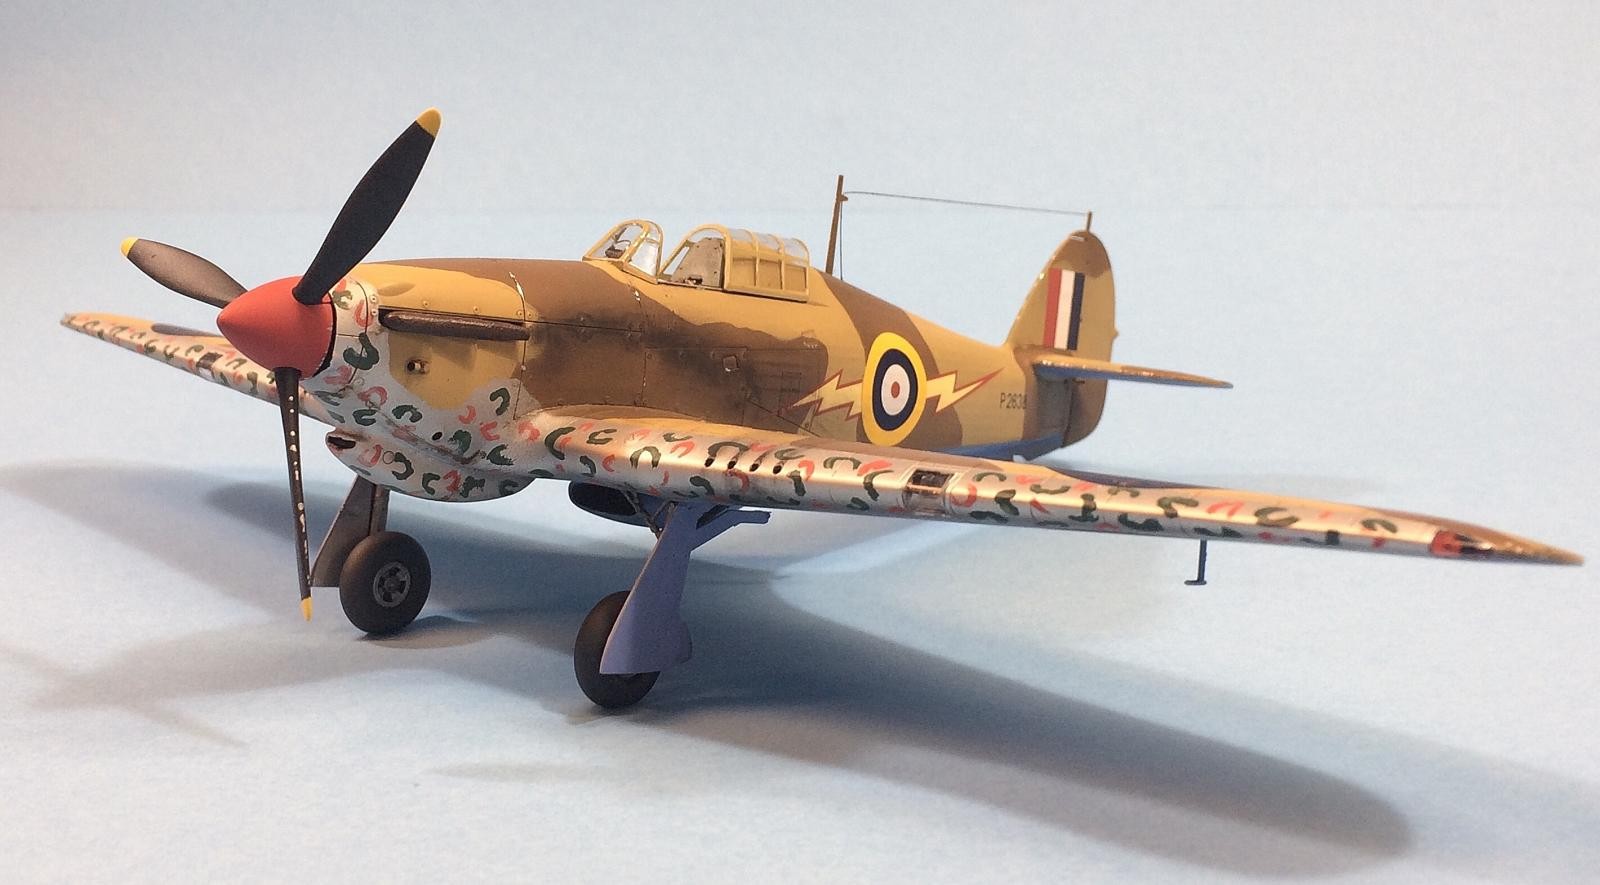 Airwaves 1/48 Hawker Hurricane Mk.I etch for Airfix kit # AEC48044